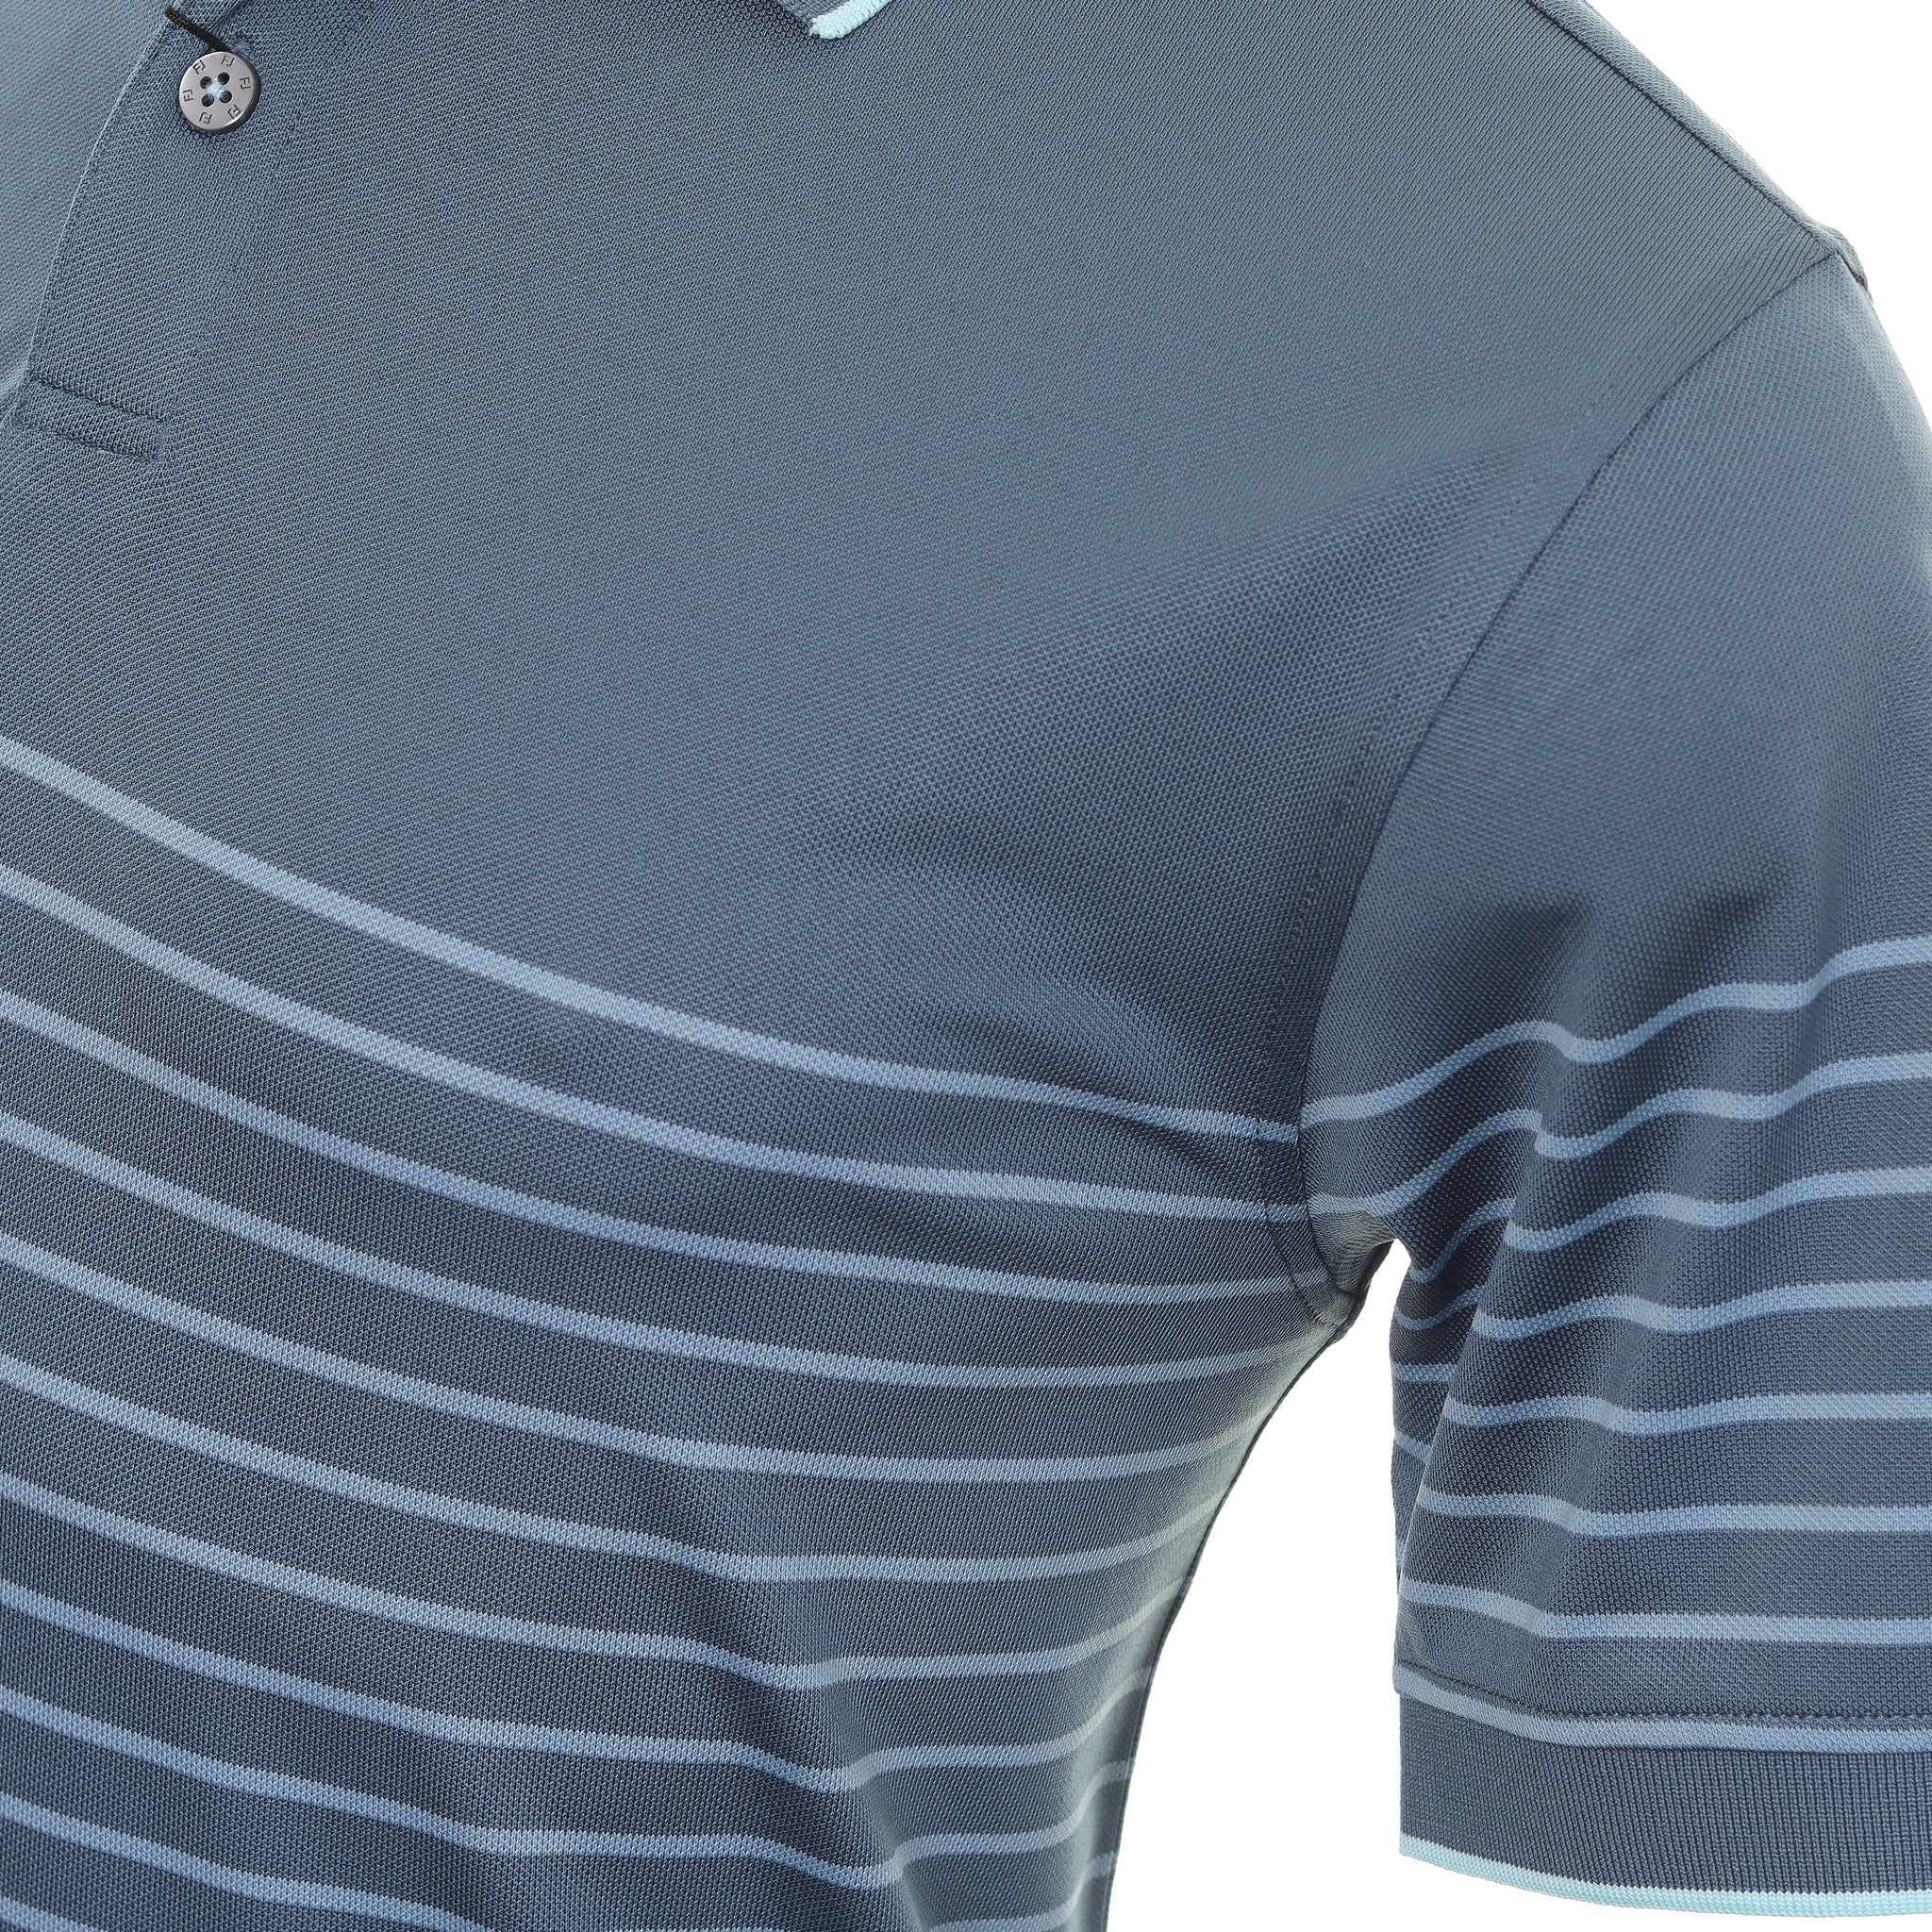 FootJoy Breton Stripe Pique Golf Shirt